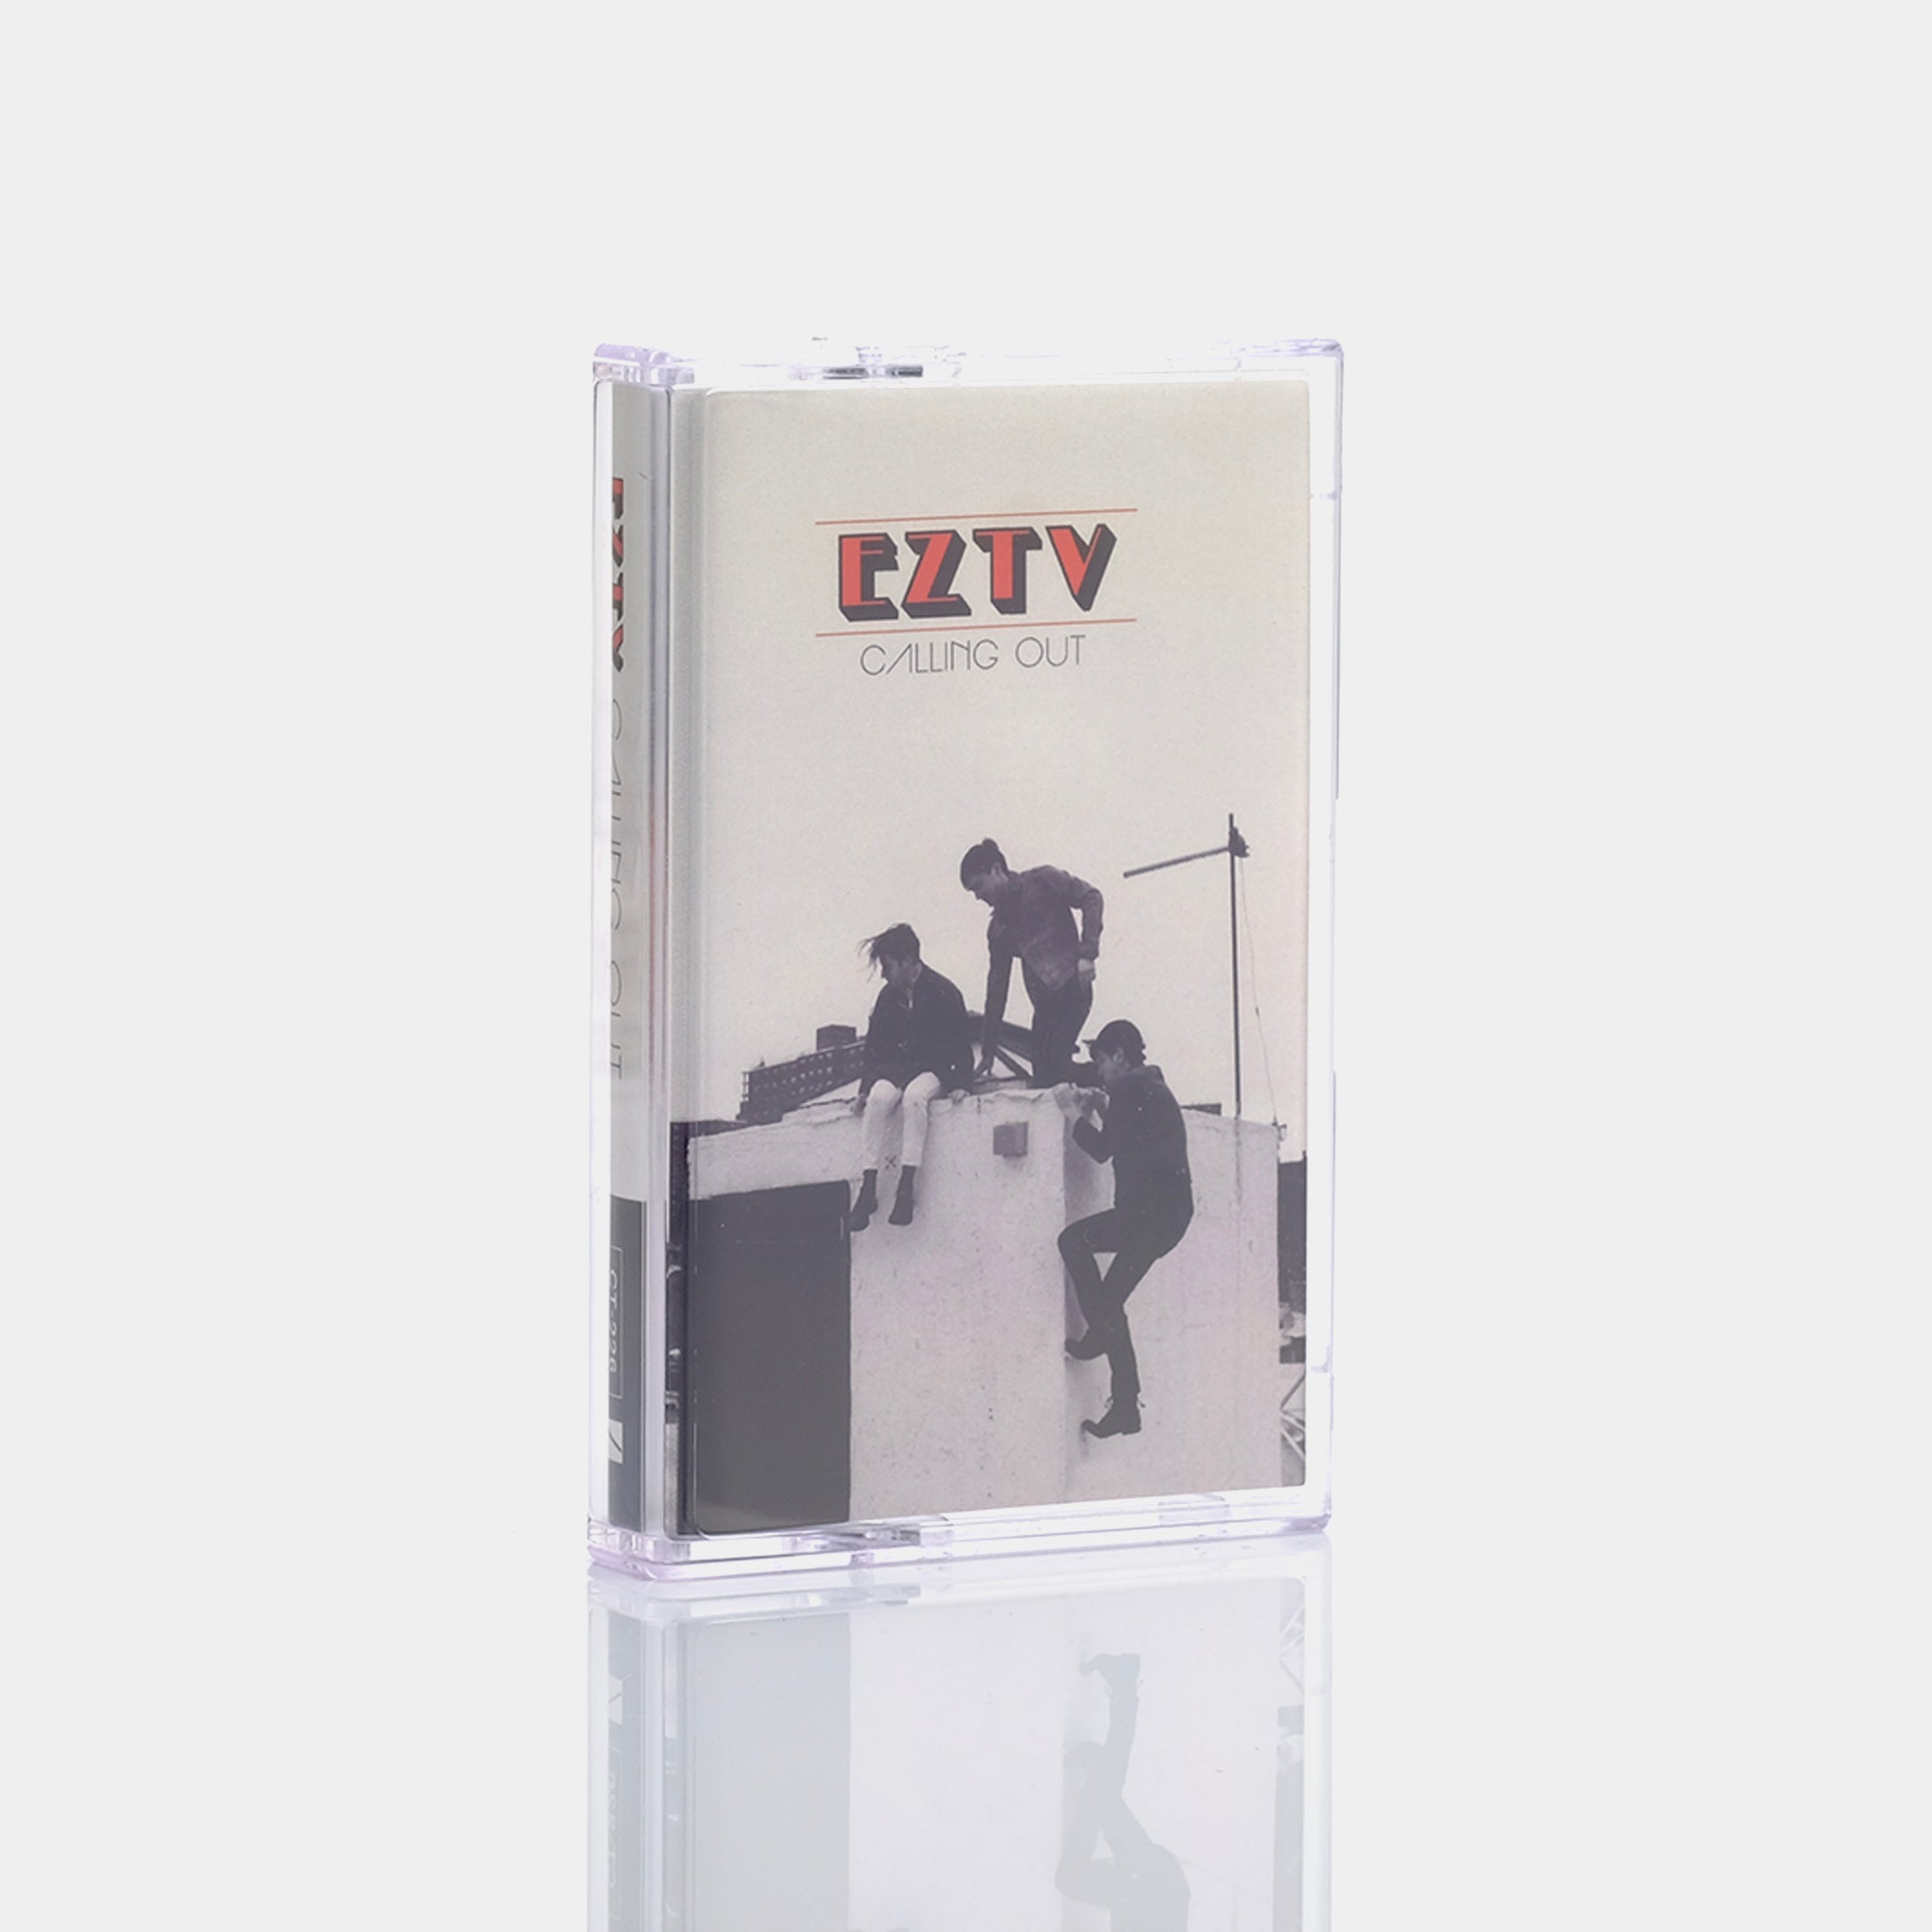 EZTV - Calling Out Cassette Tape